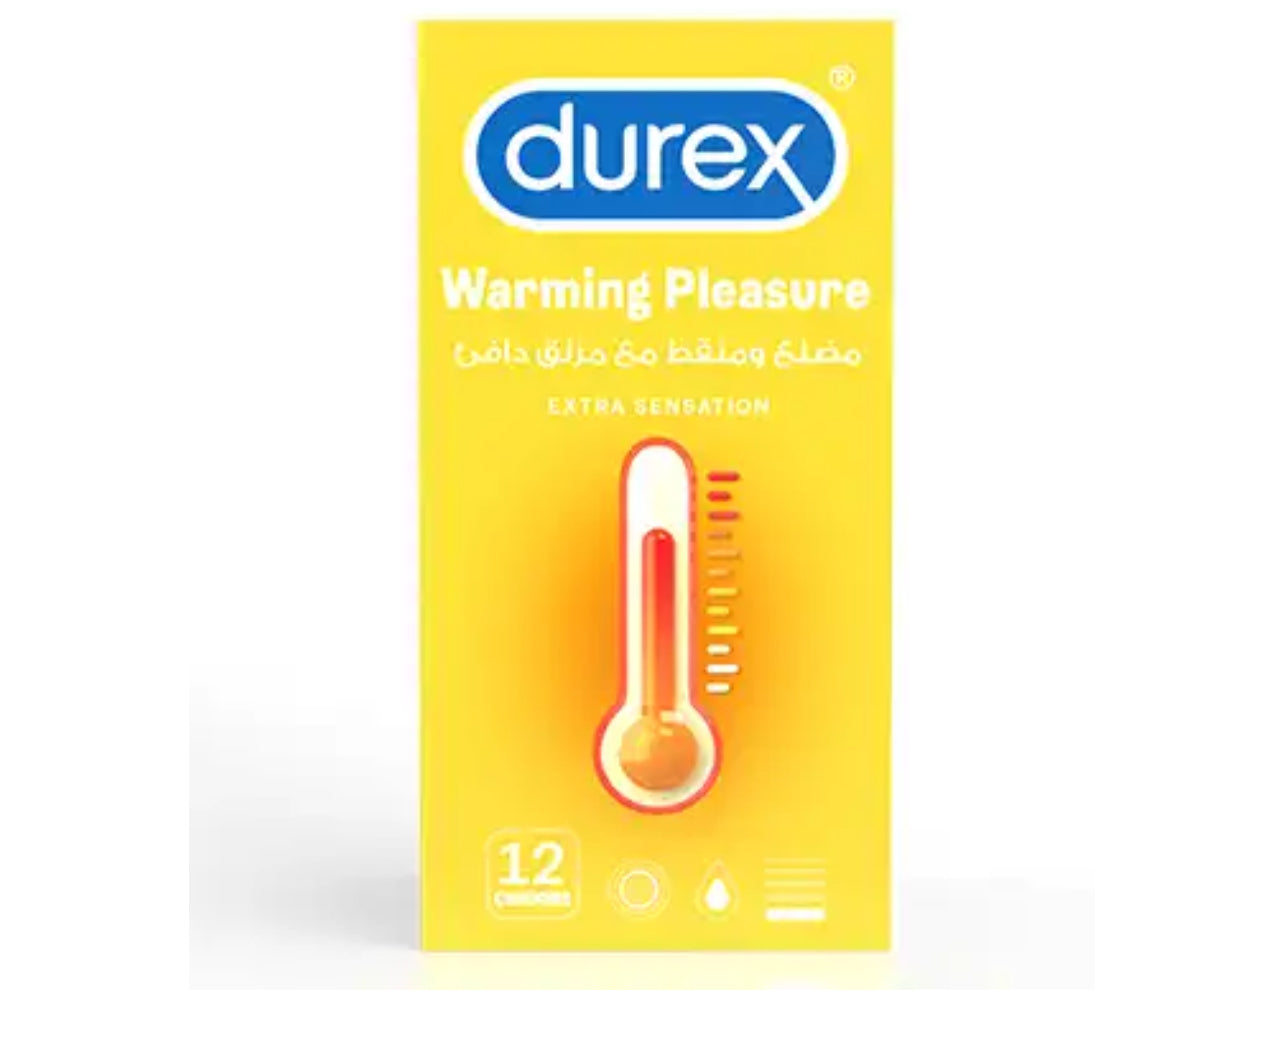 Durex Warming Pleasure 12 Condoms